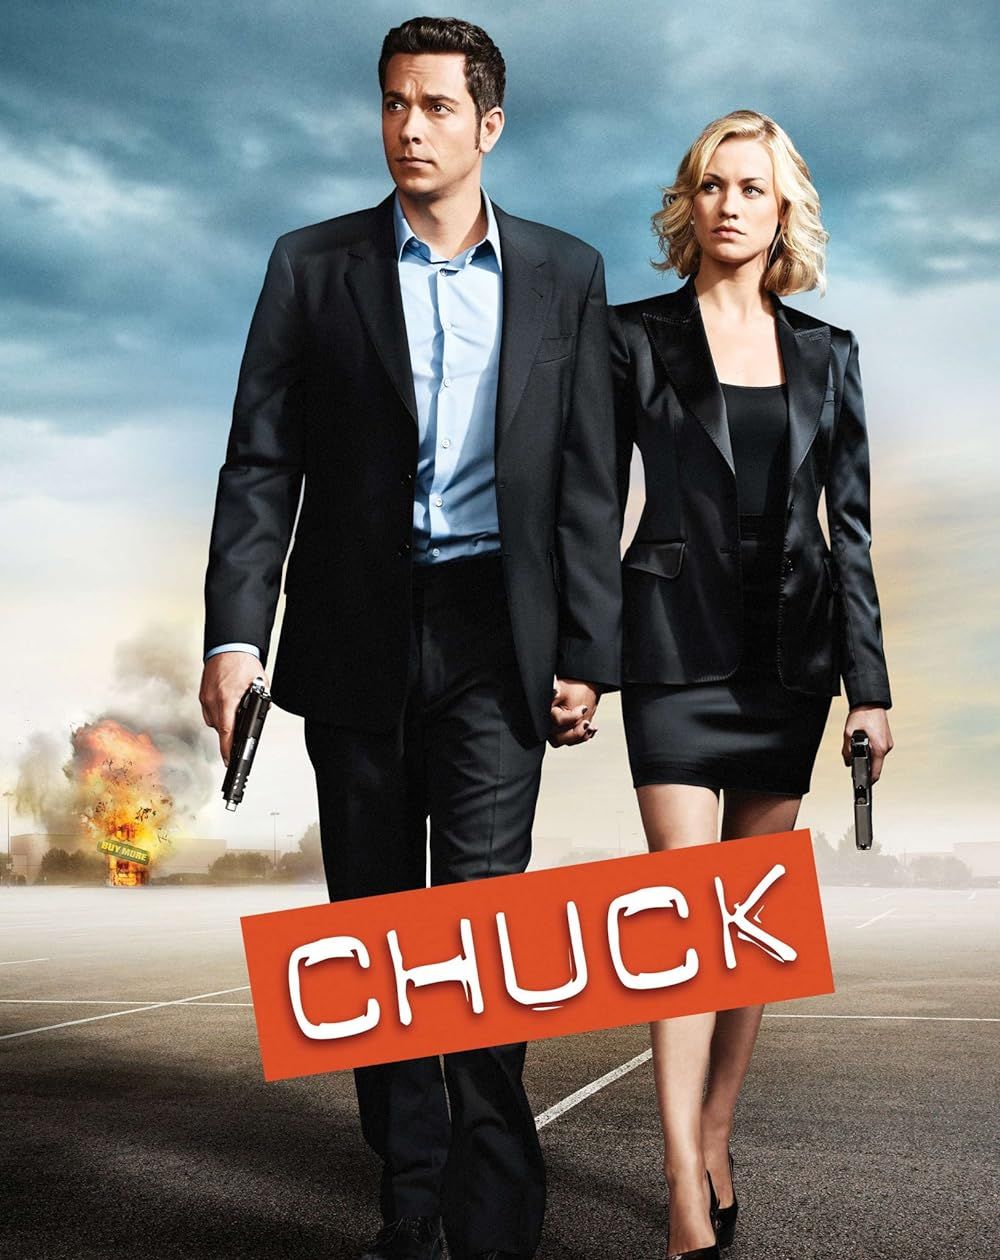 Zachary Levi and Yvonne Strahovski on the poster for Chuck.